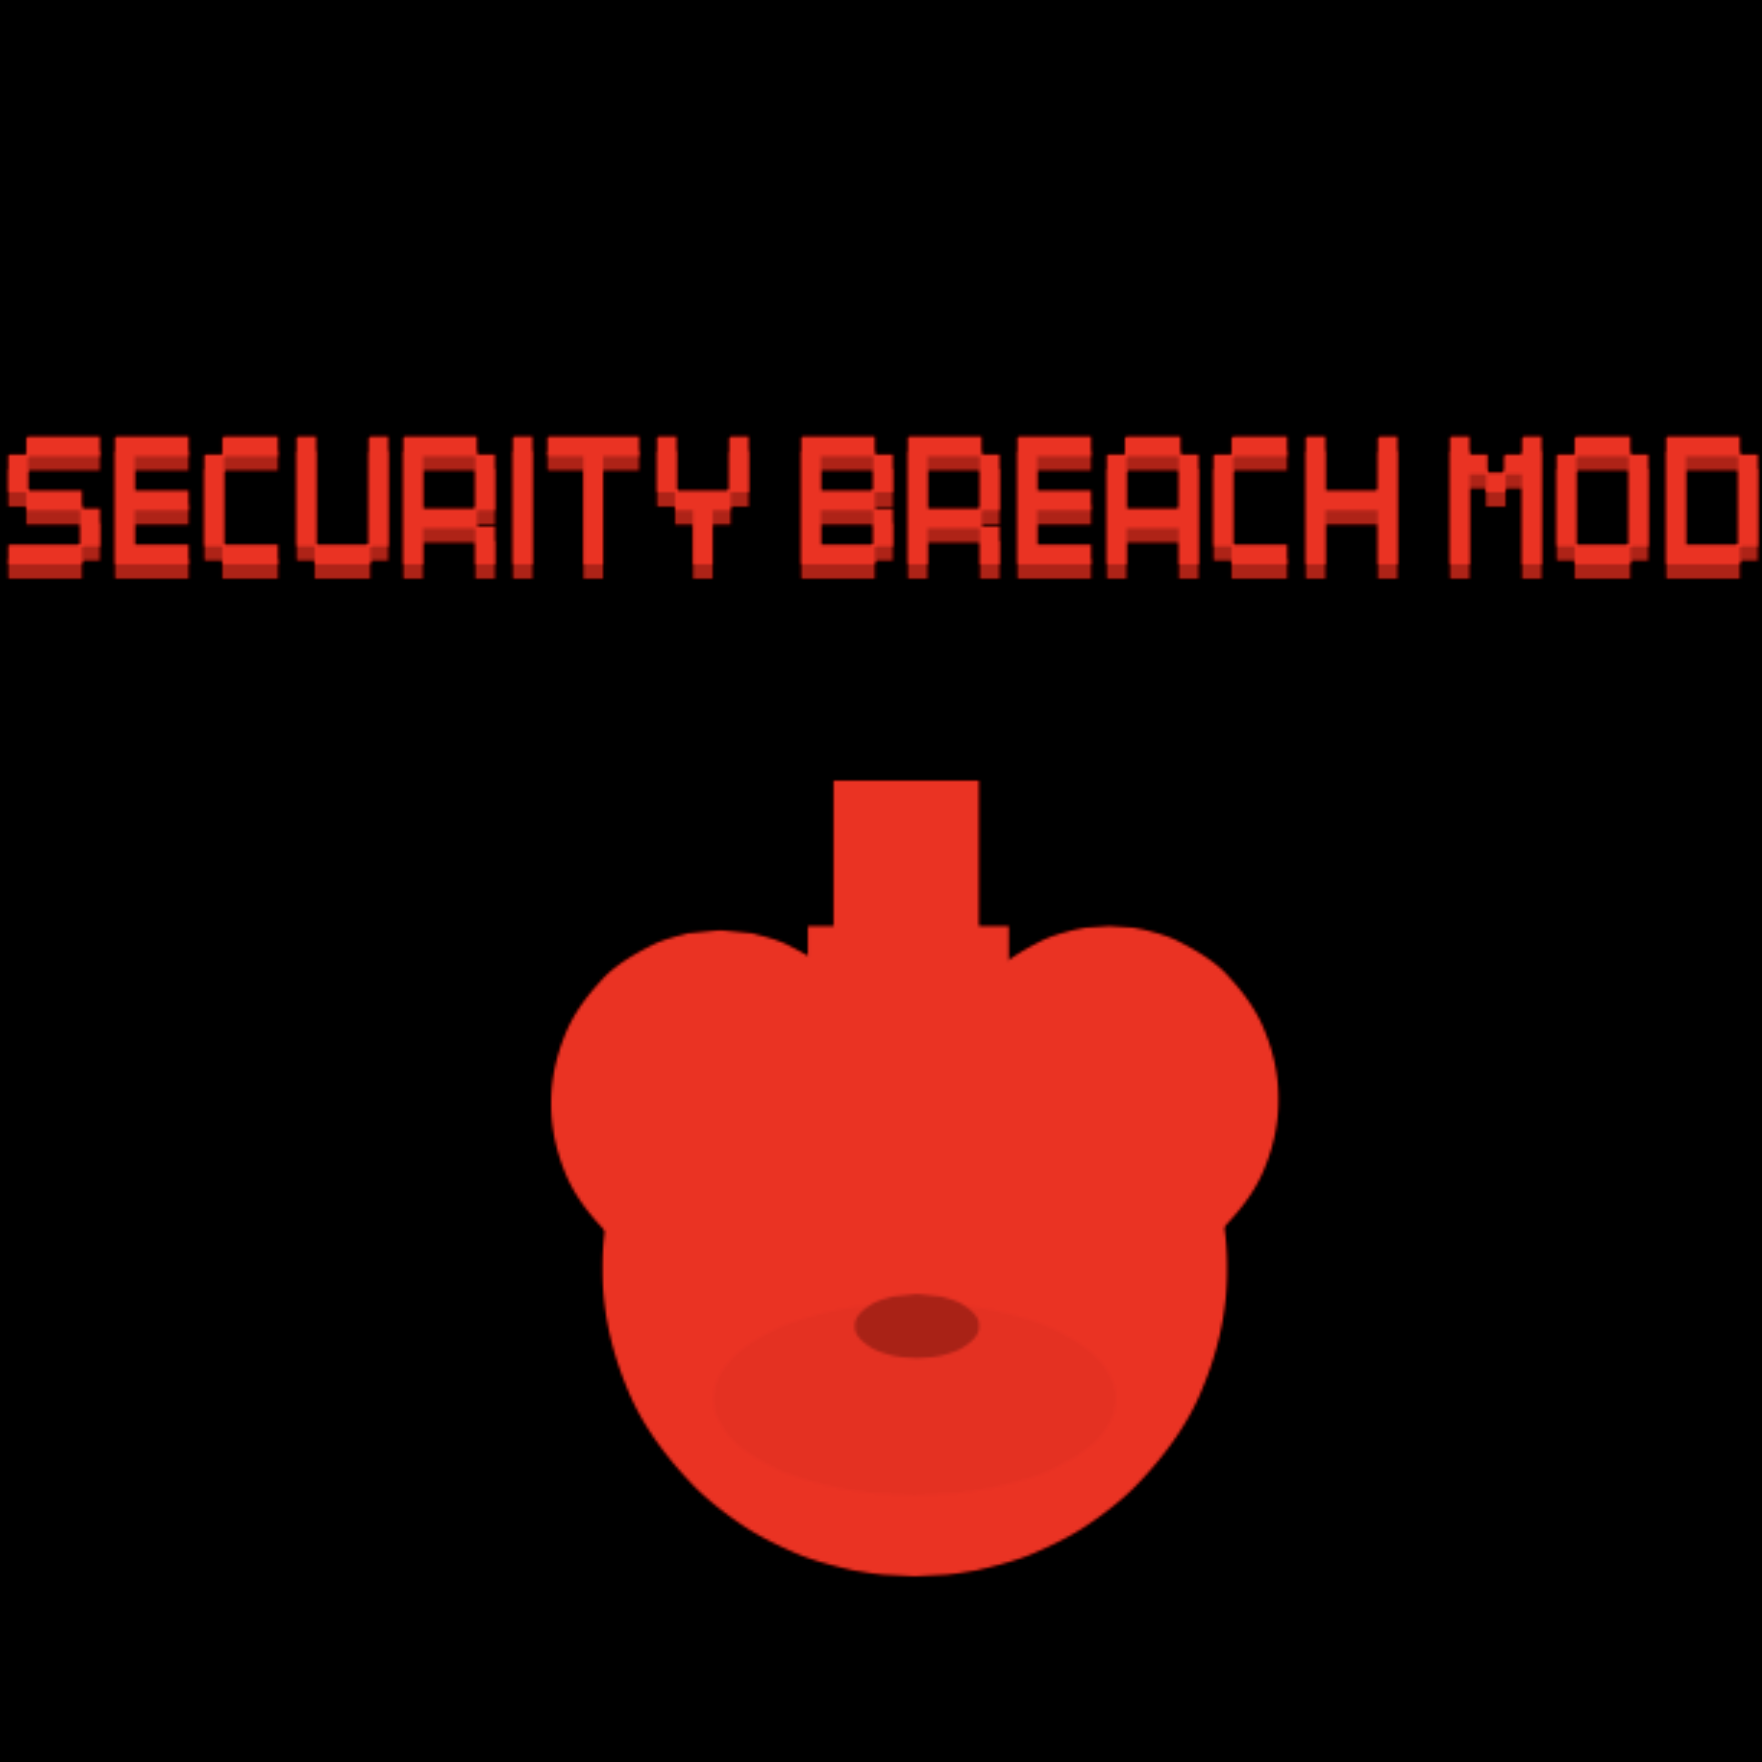 Fnaf World Mod] FNAF Security Breach ALL ADVENTURE ANIMATRONICS - FNaF Mods  